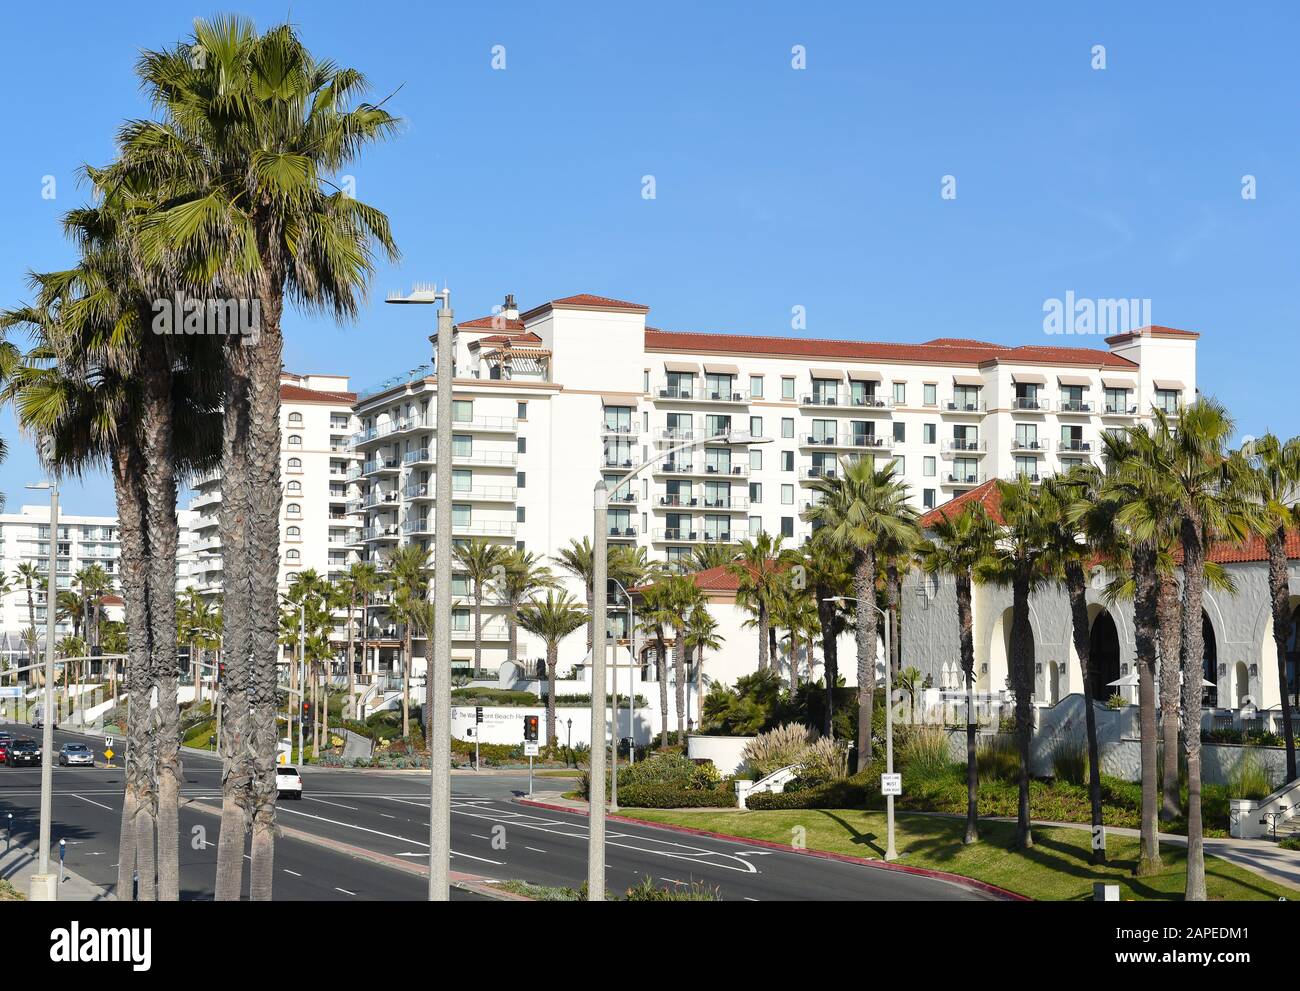 HUNTINGTON BEACH, KALIFORNIEN - 22. JANUAR 2020: Das Hilton Waterfront Beach Resort, am Pacific Coast Highway. Stockfoto